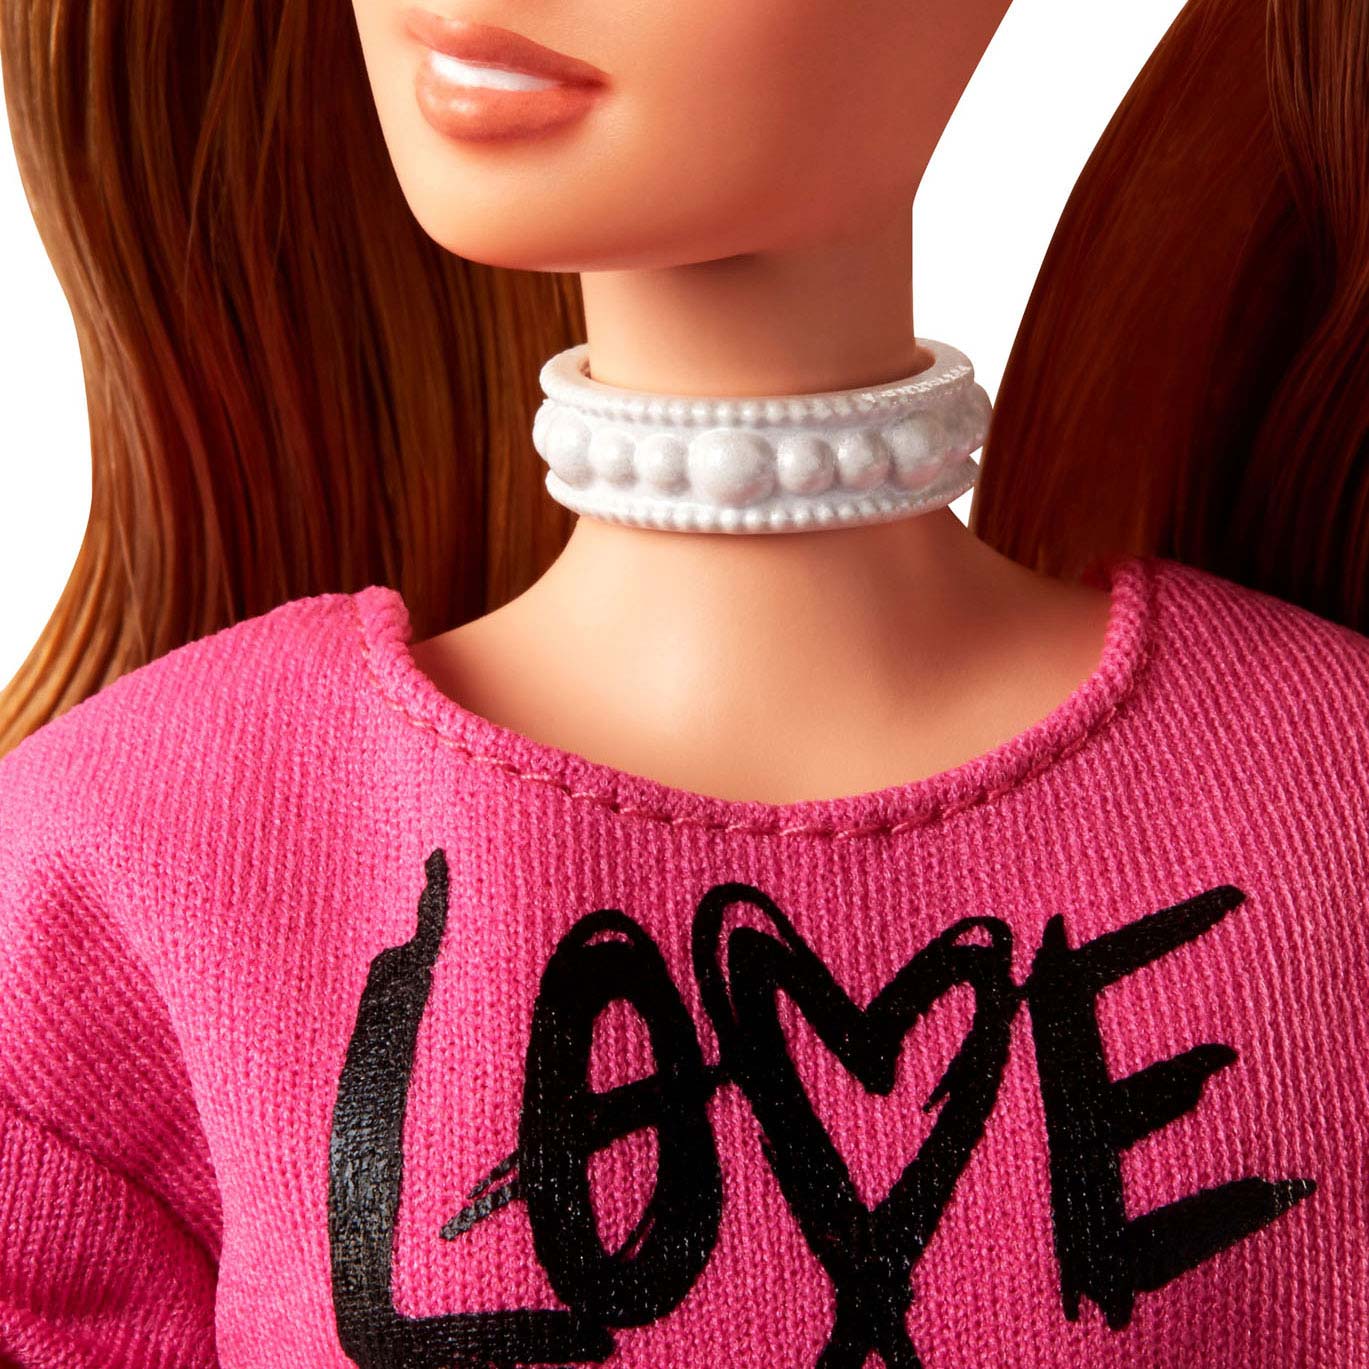 Barbie Pop Fashionistas - Wear your Heart